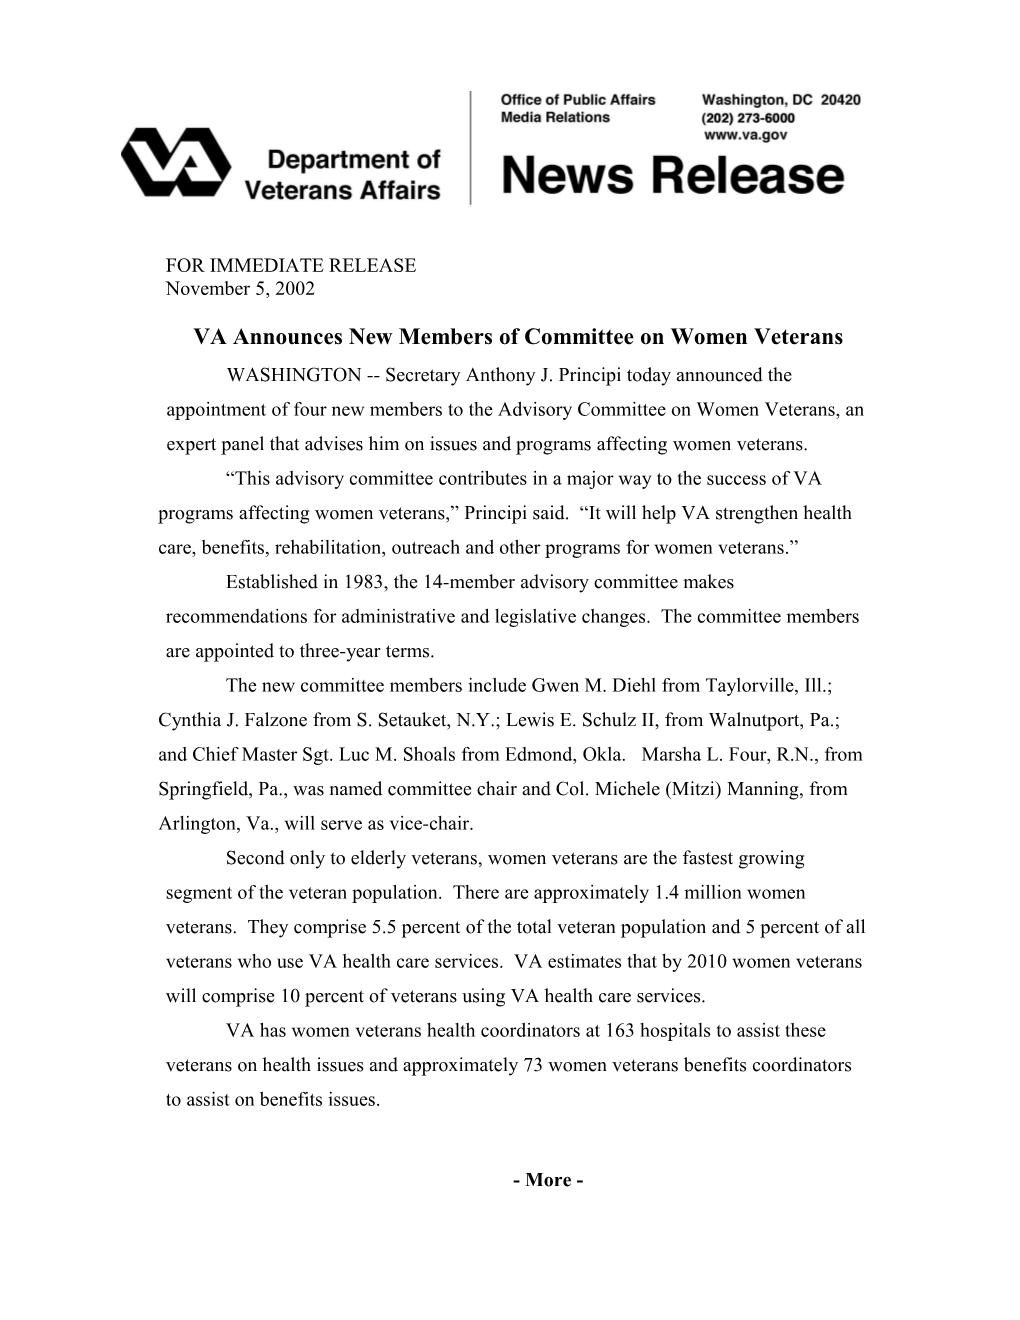 VA Announces New Members of Committee on Women Veterans